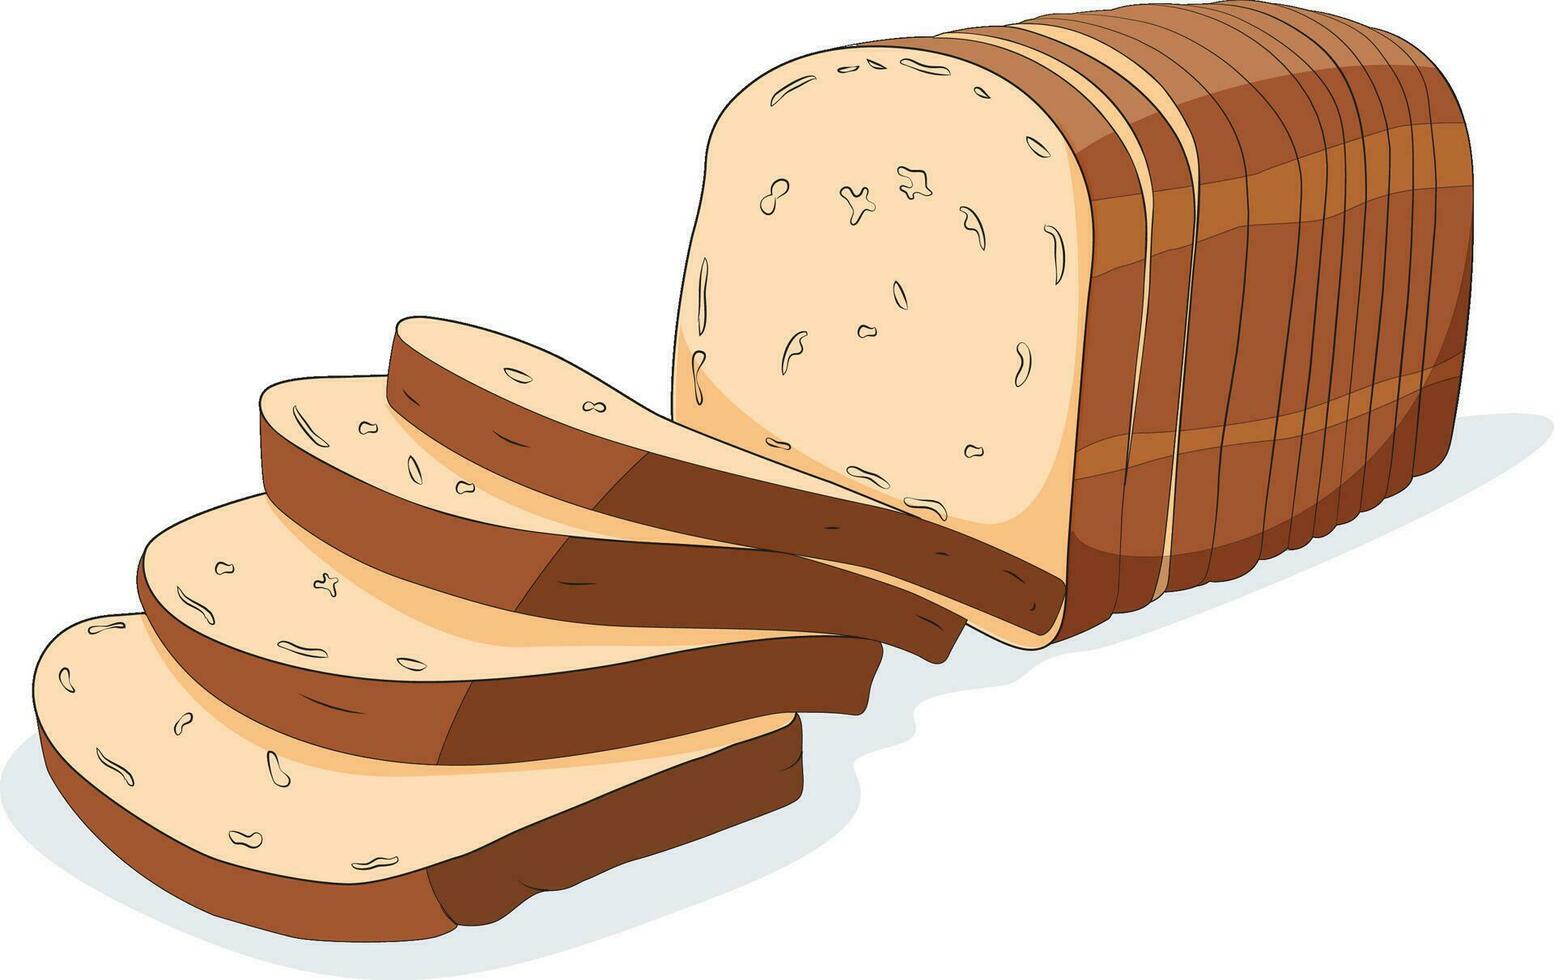 bröd vektor illustration.eps